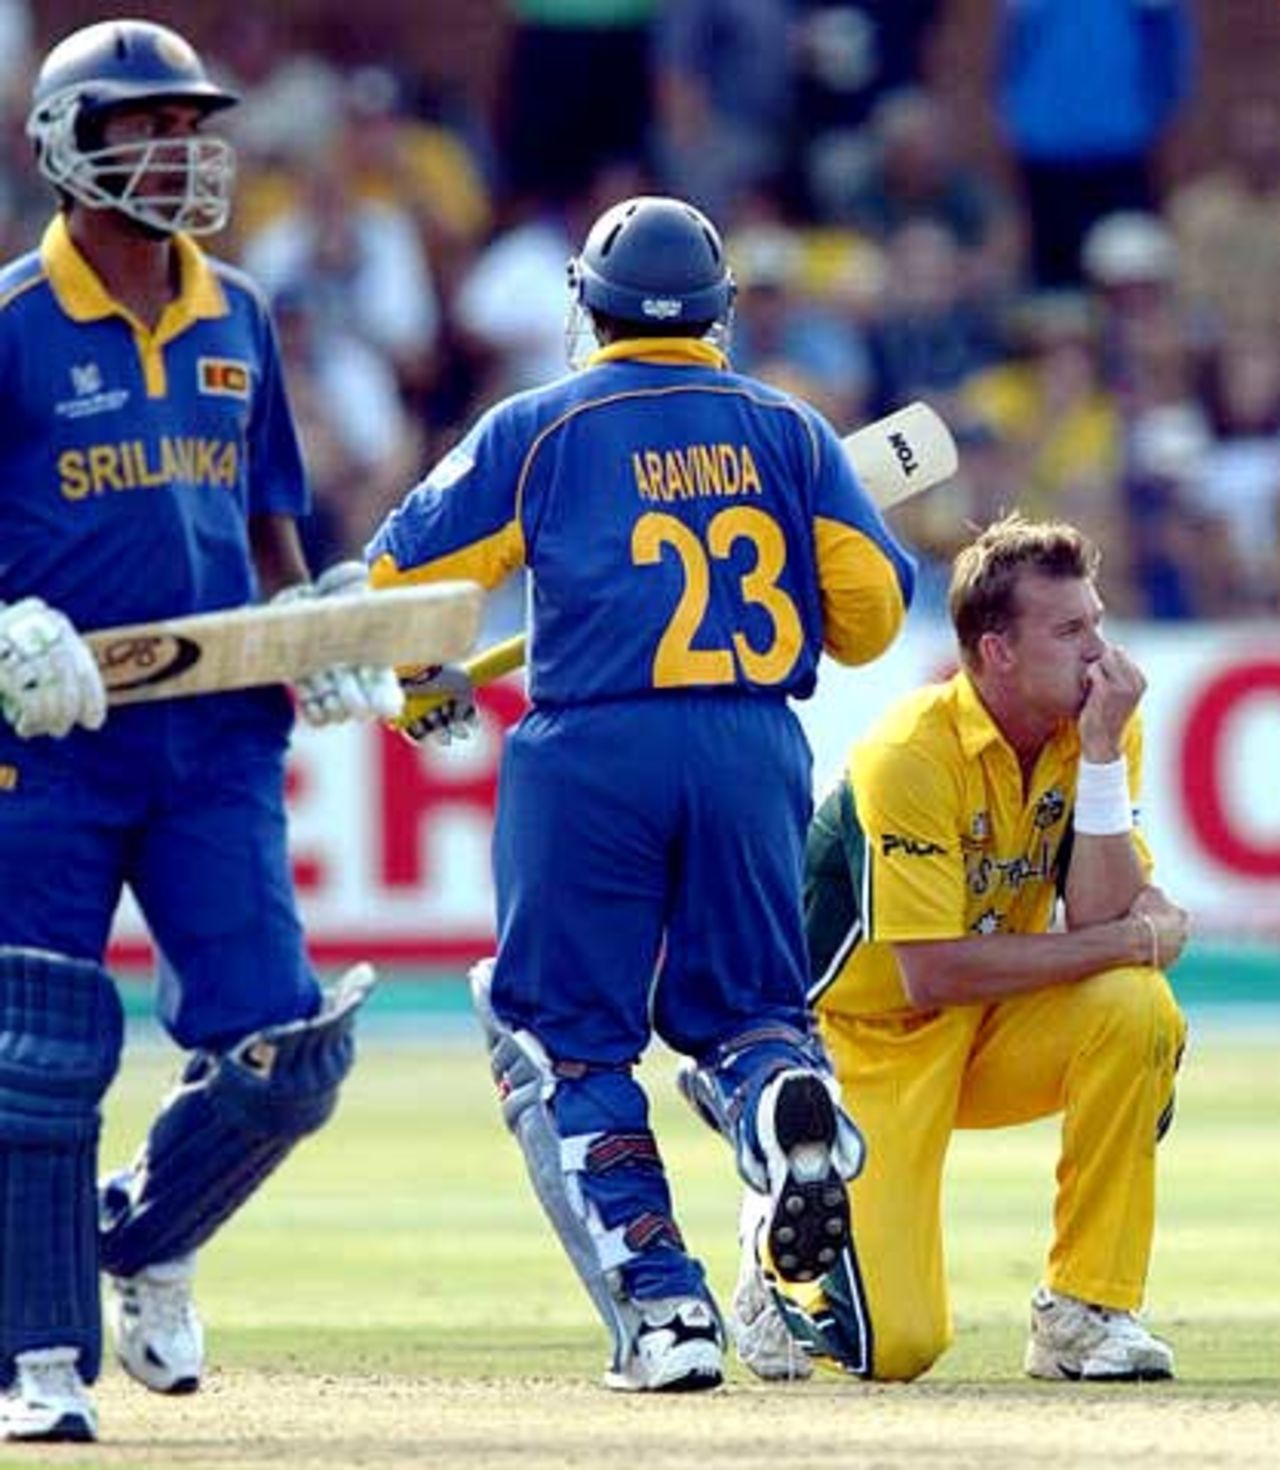 World Cup 2003, 1st Semi Final - Australia v Sri Lanka at Port Elizabeth, 18th March 2003